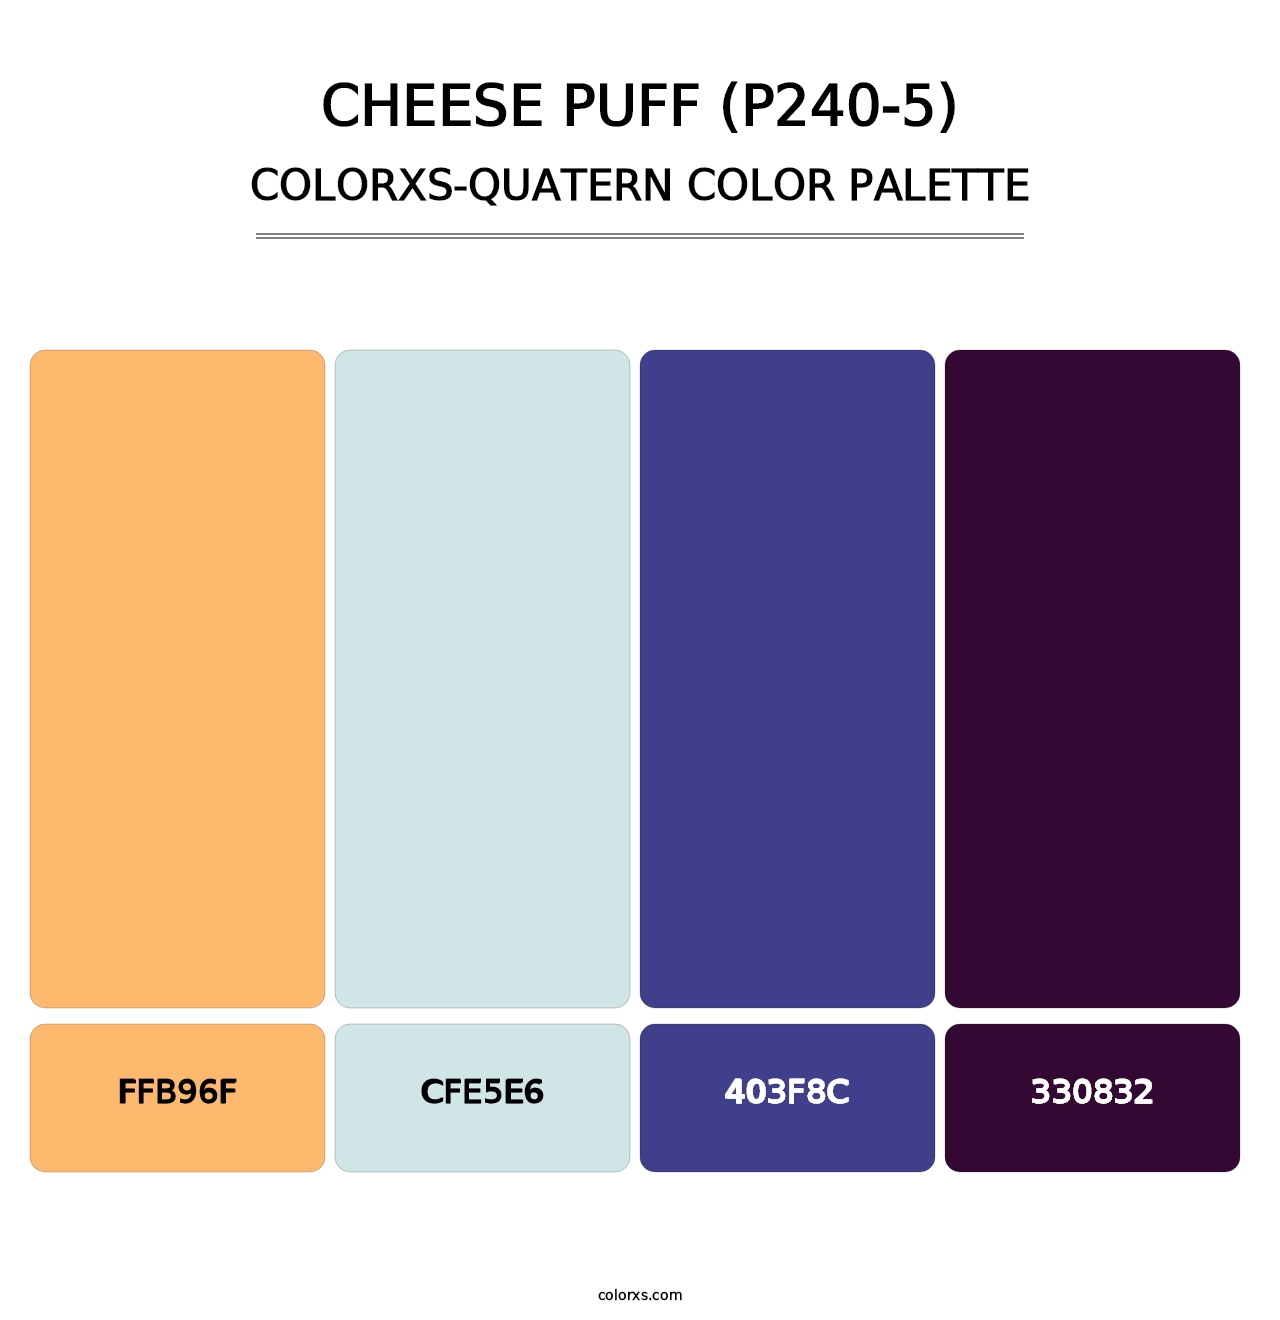 Cheese Puff (P240-5) - Colorxs Quatern Palette